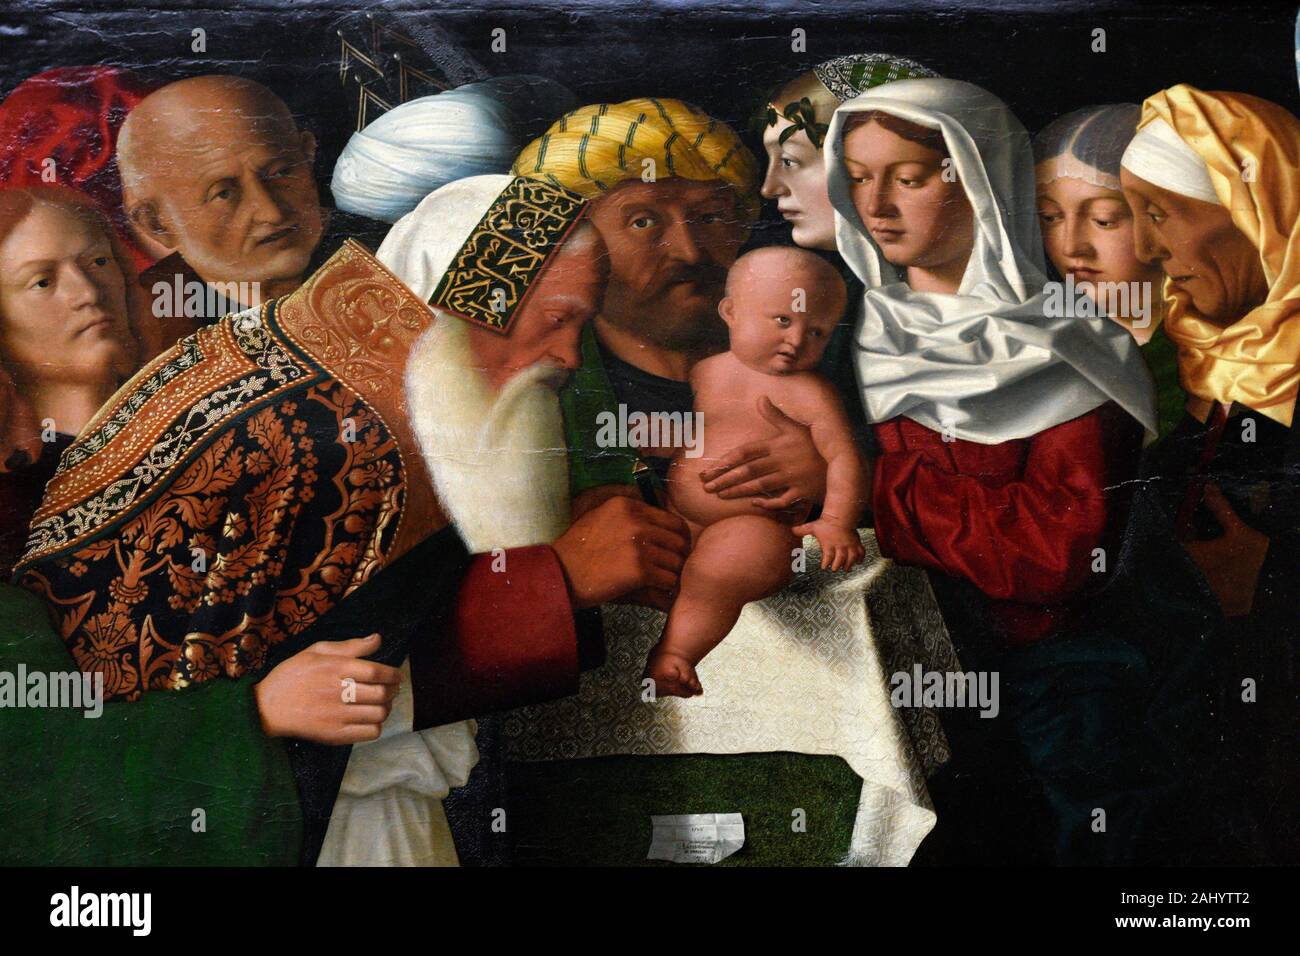 La Circoncision, 1506, by the artist Bartolomeo Veneto, Louvre museum, Paris, France. Stock Photo